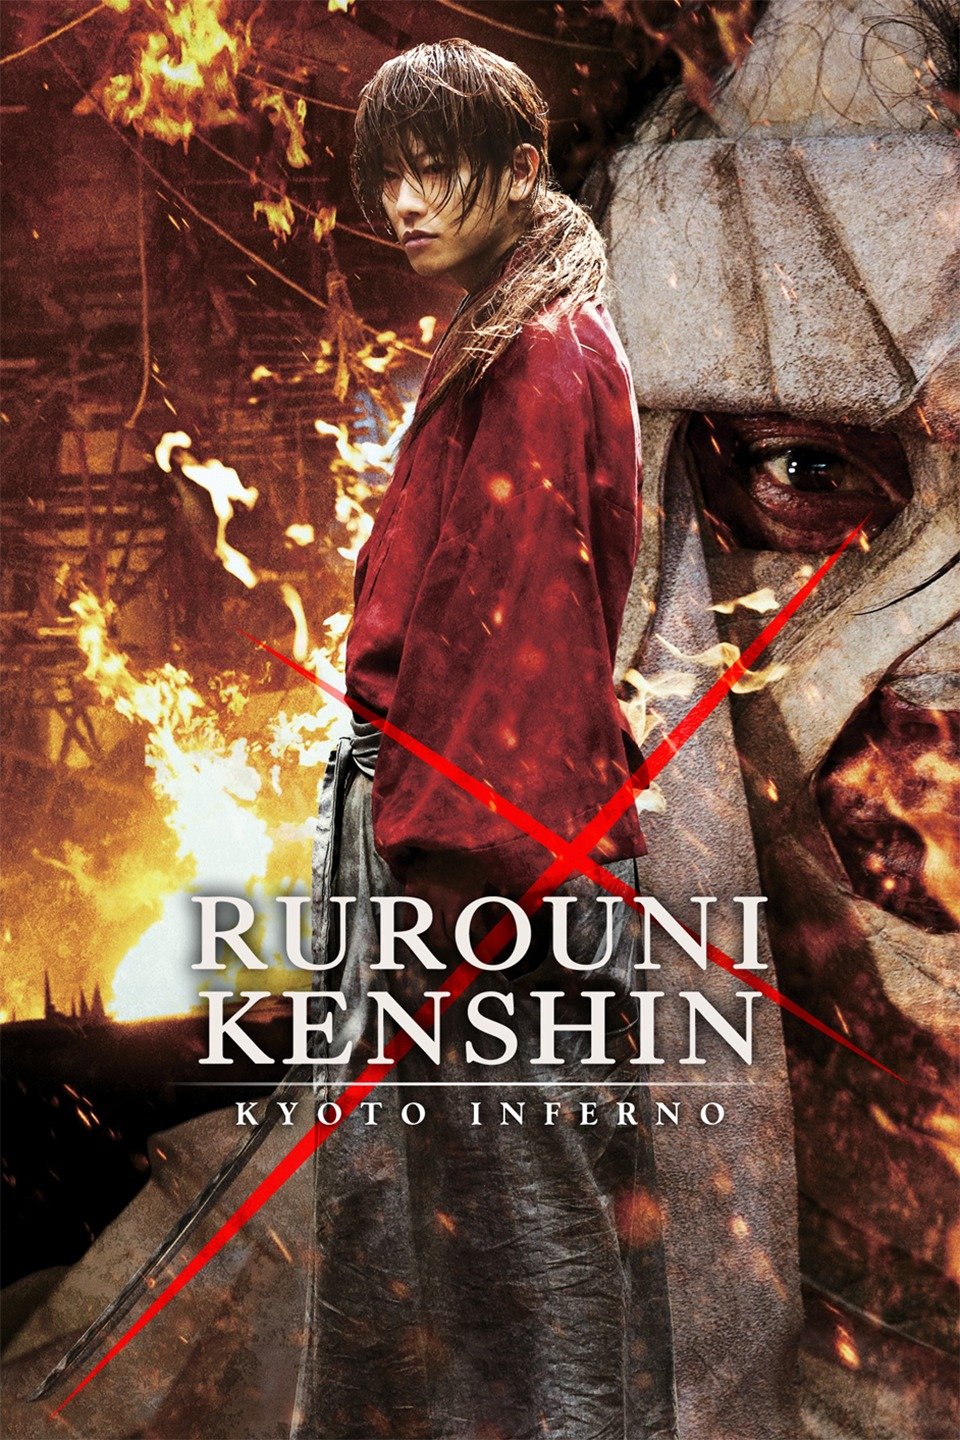 rurouni kenshin kyoto inferno soundtrack list